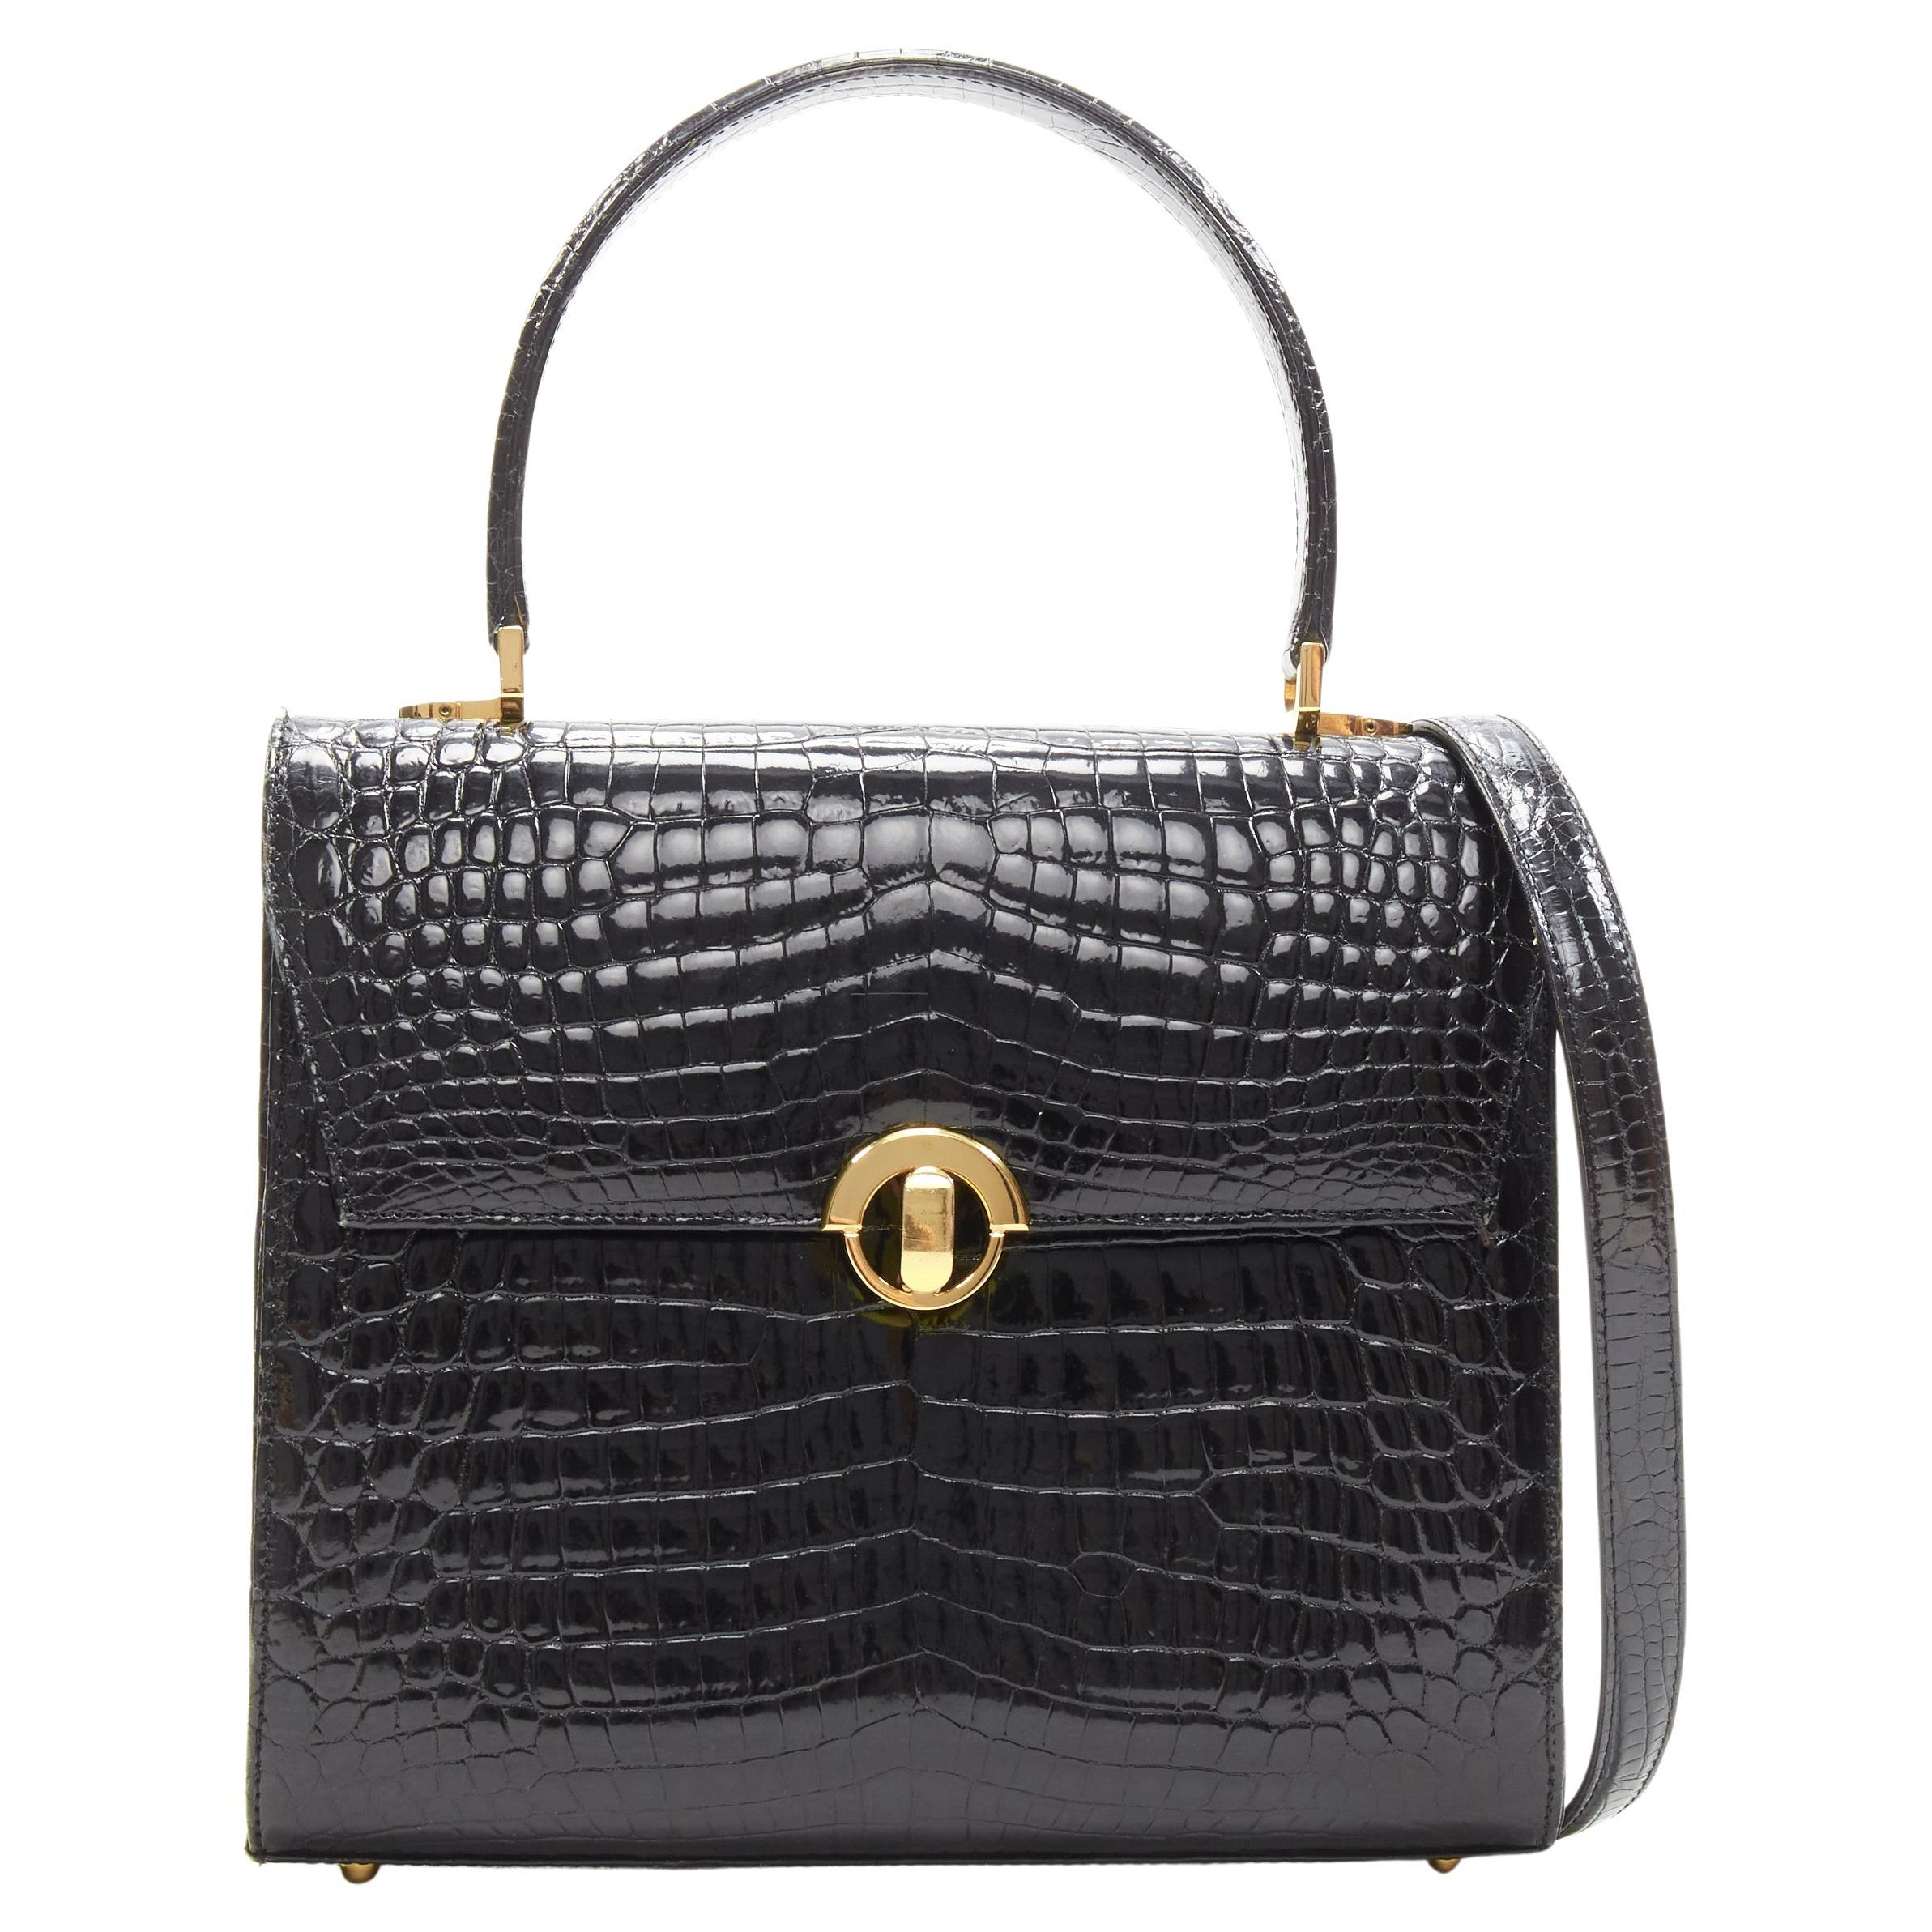 KWANPEN black polished leather gold turnlock crossbody flap satchel bag For Sale